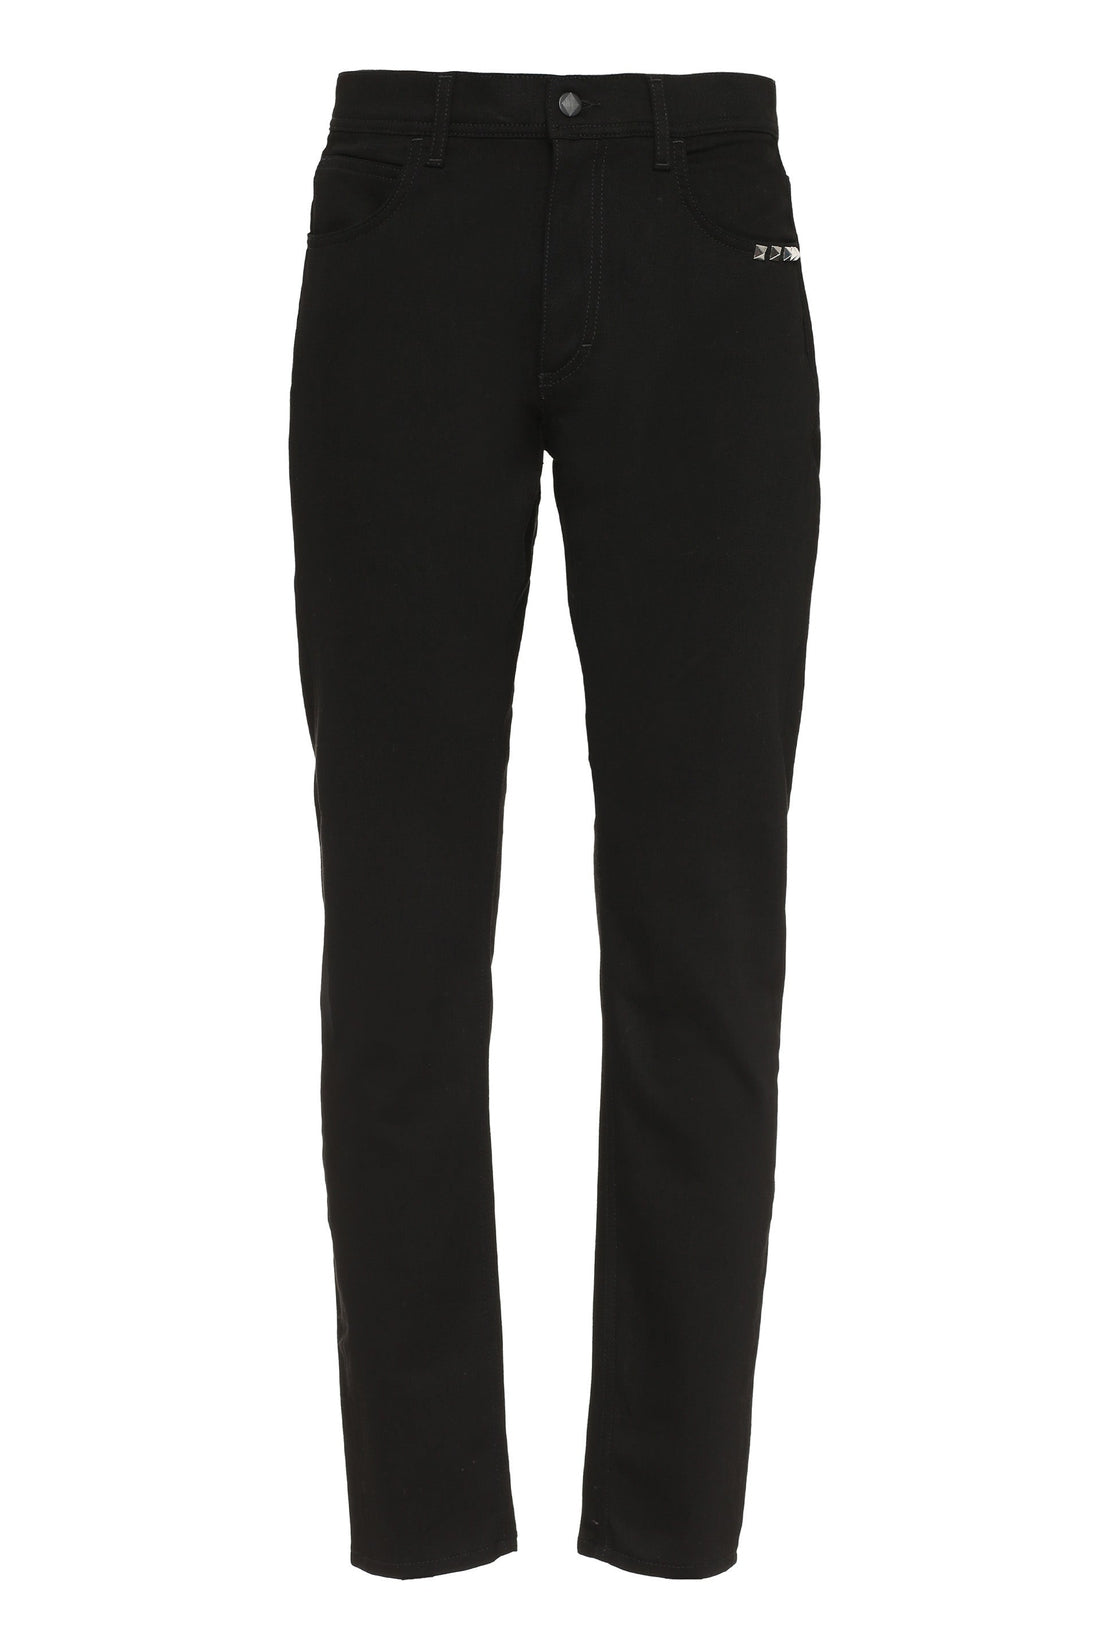 Amish-OUTLET-SALE-David 5-pocket jeans-ARCHIVIST